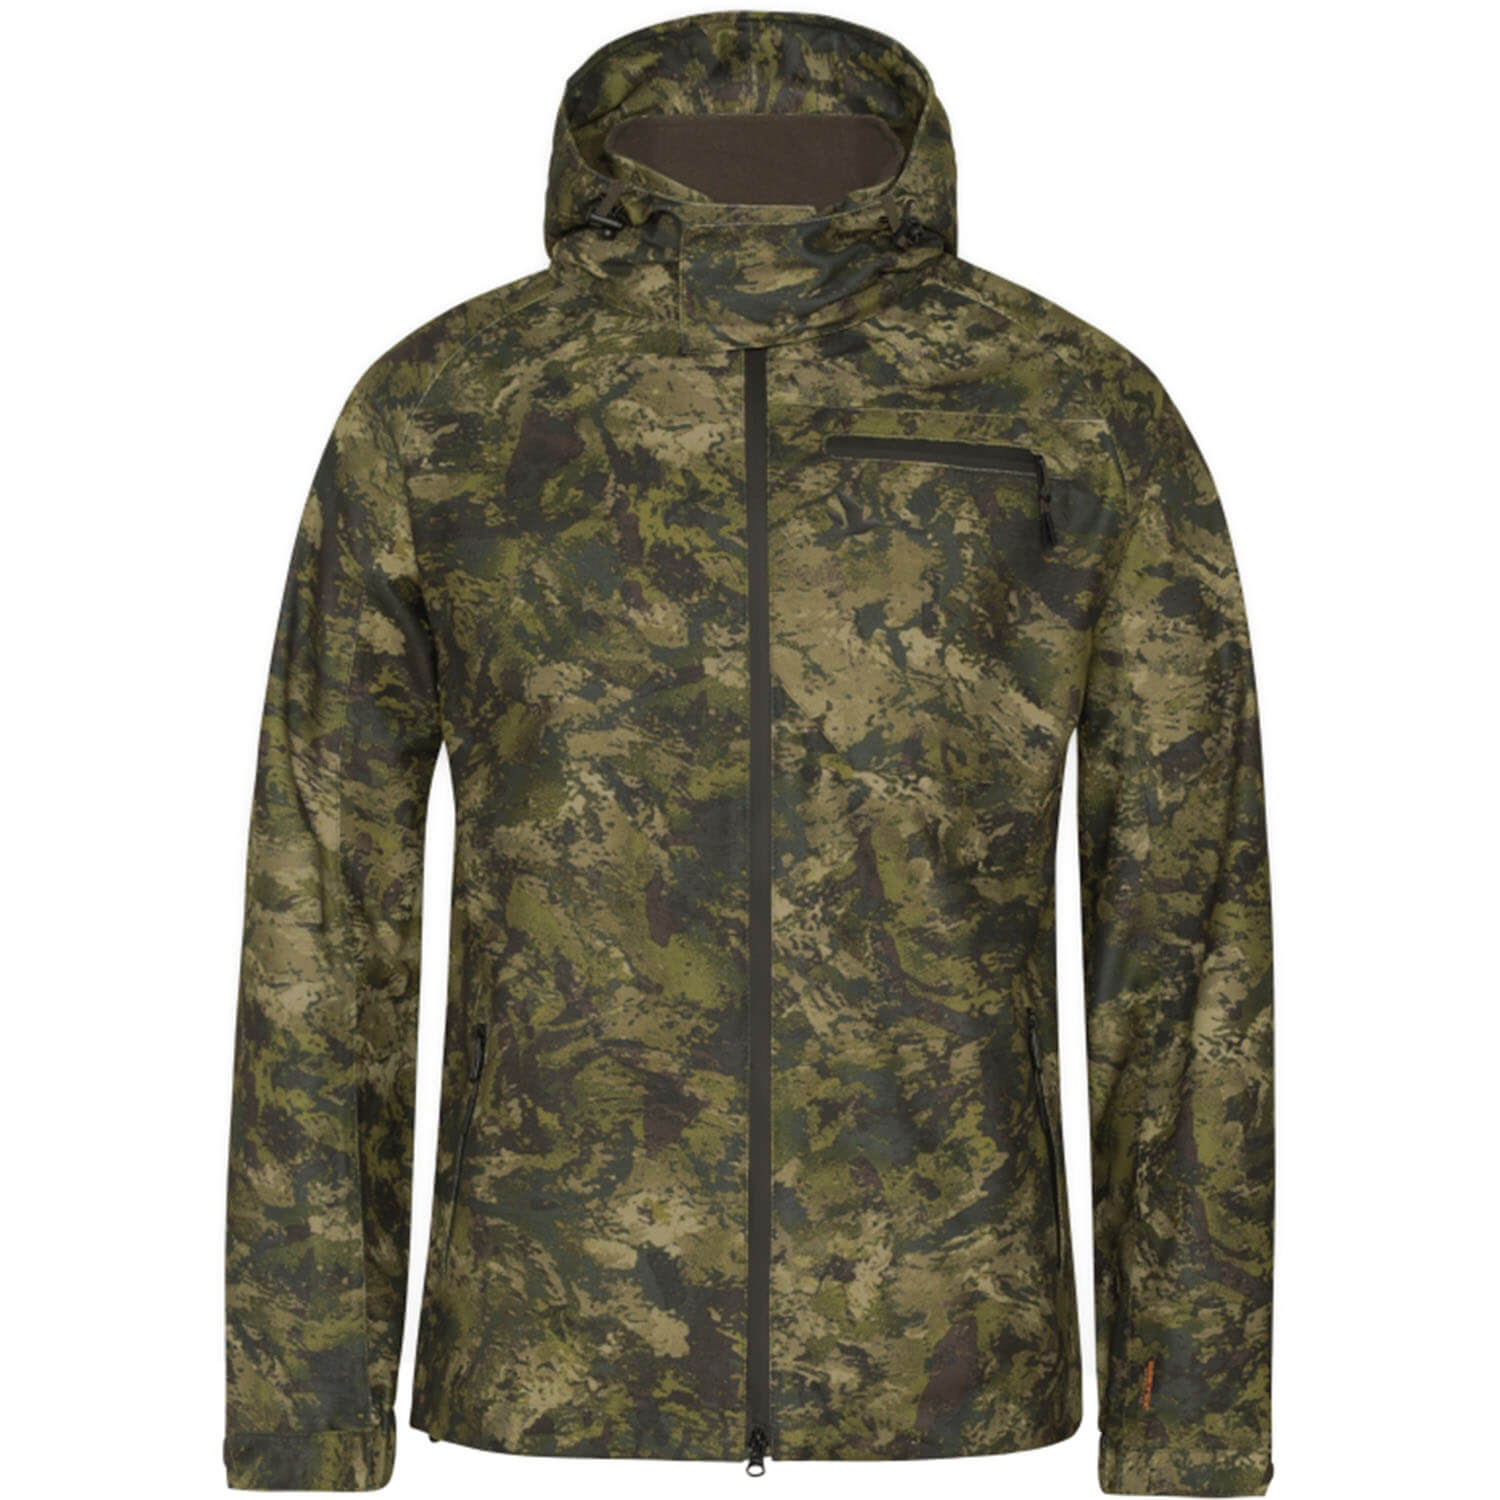 Seeland Jacket Avail (InVis) - Hunting Jackets